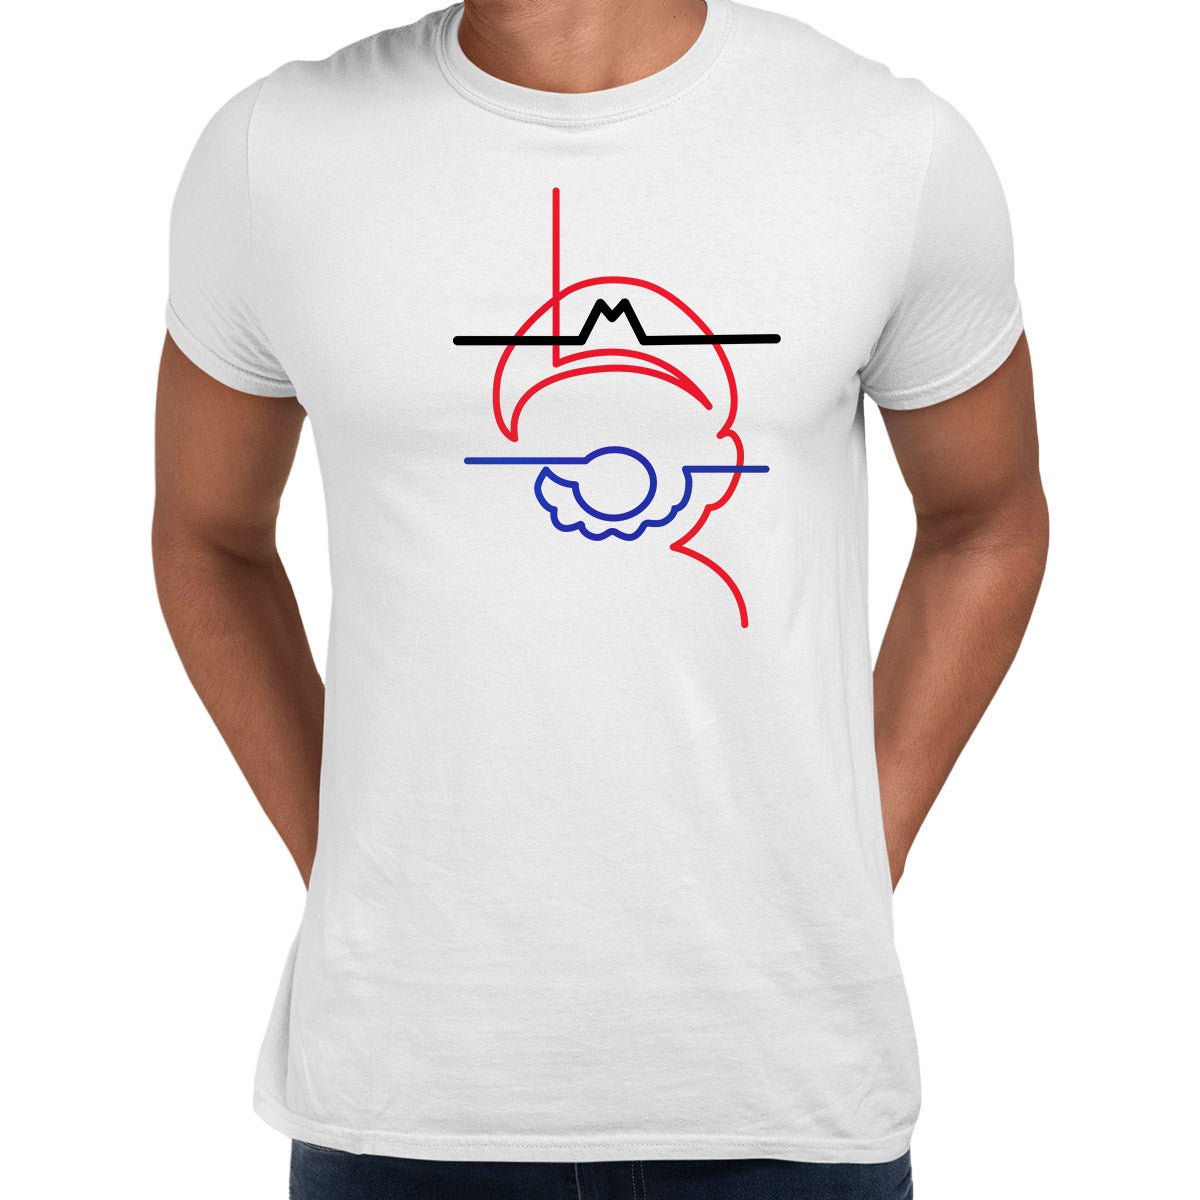 Super Mario One line drawing Movie White T-shirt